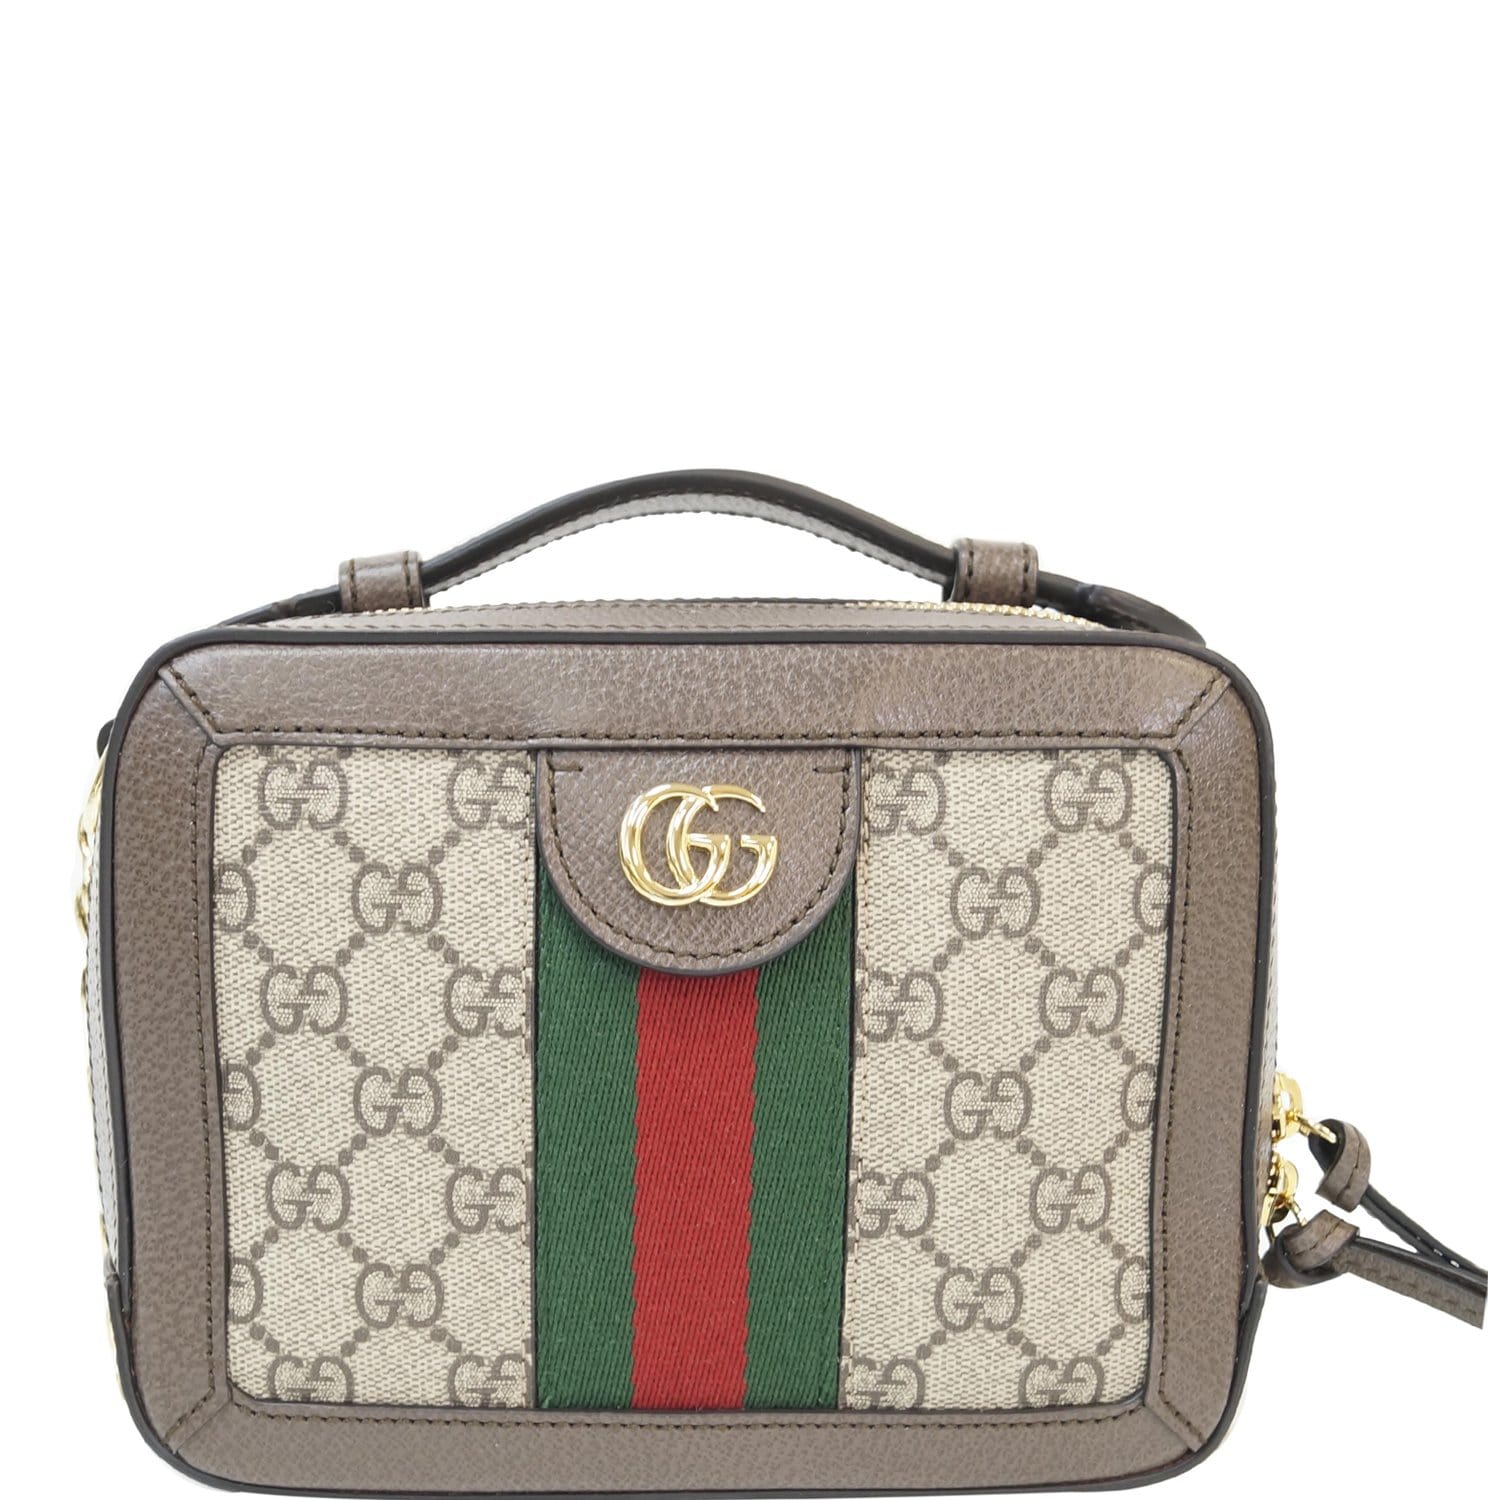 Gucci Ophidia GG mini bag